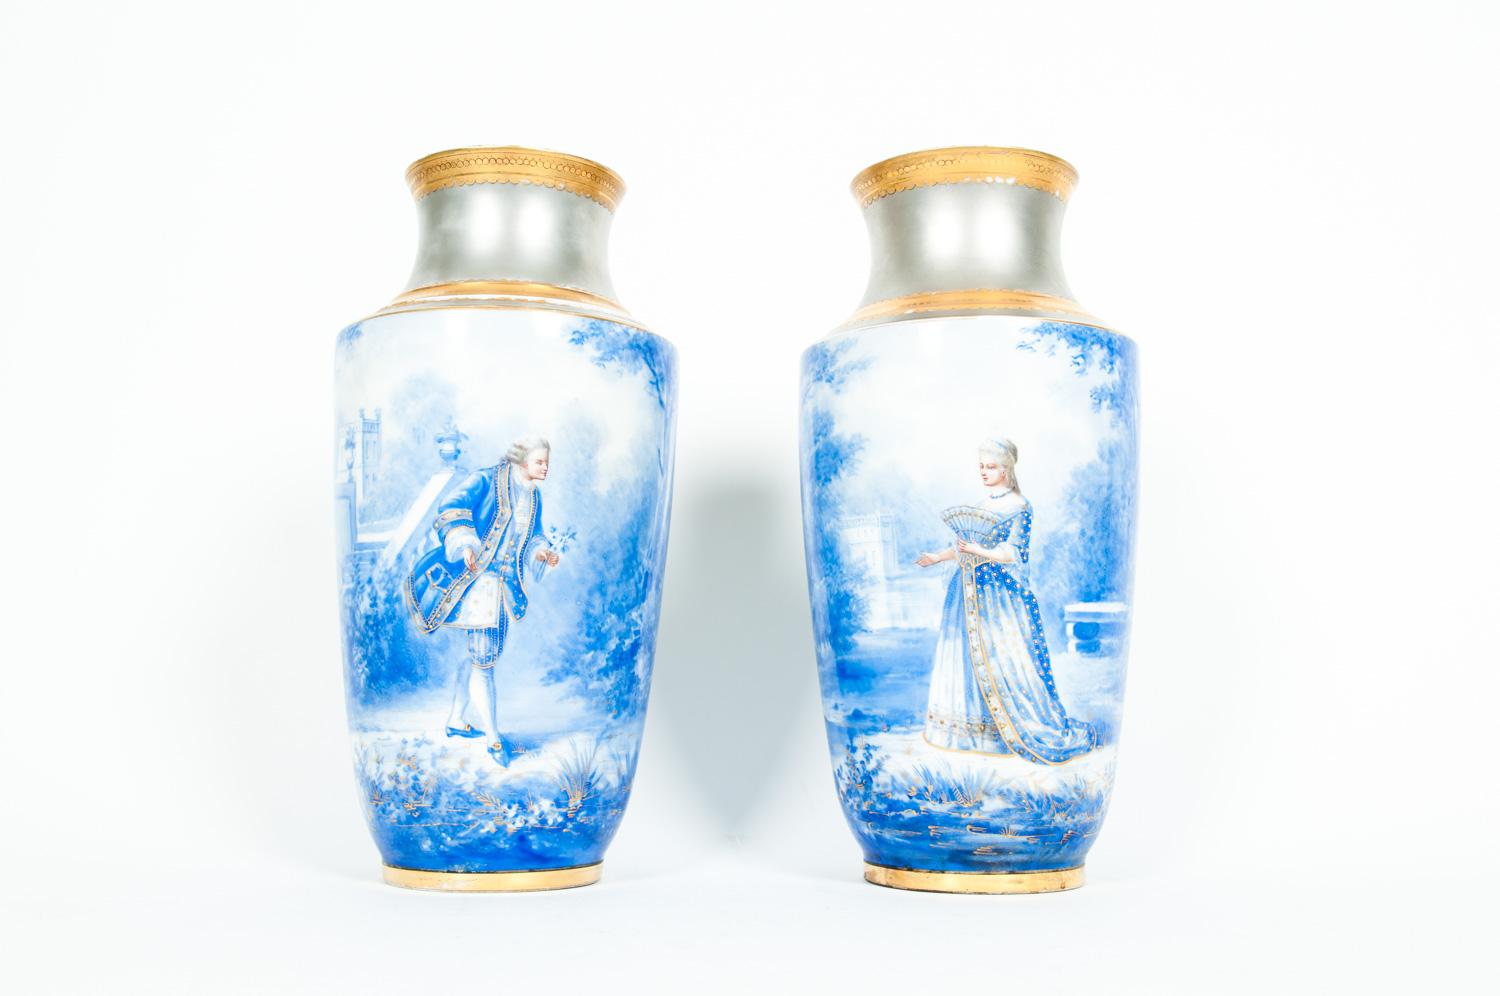 Late 19th Century 19th Century English Porcelain Decorative Vases / Pieces